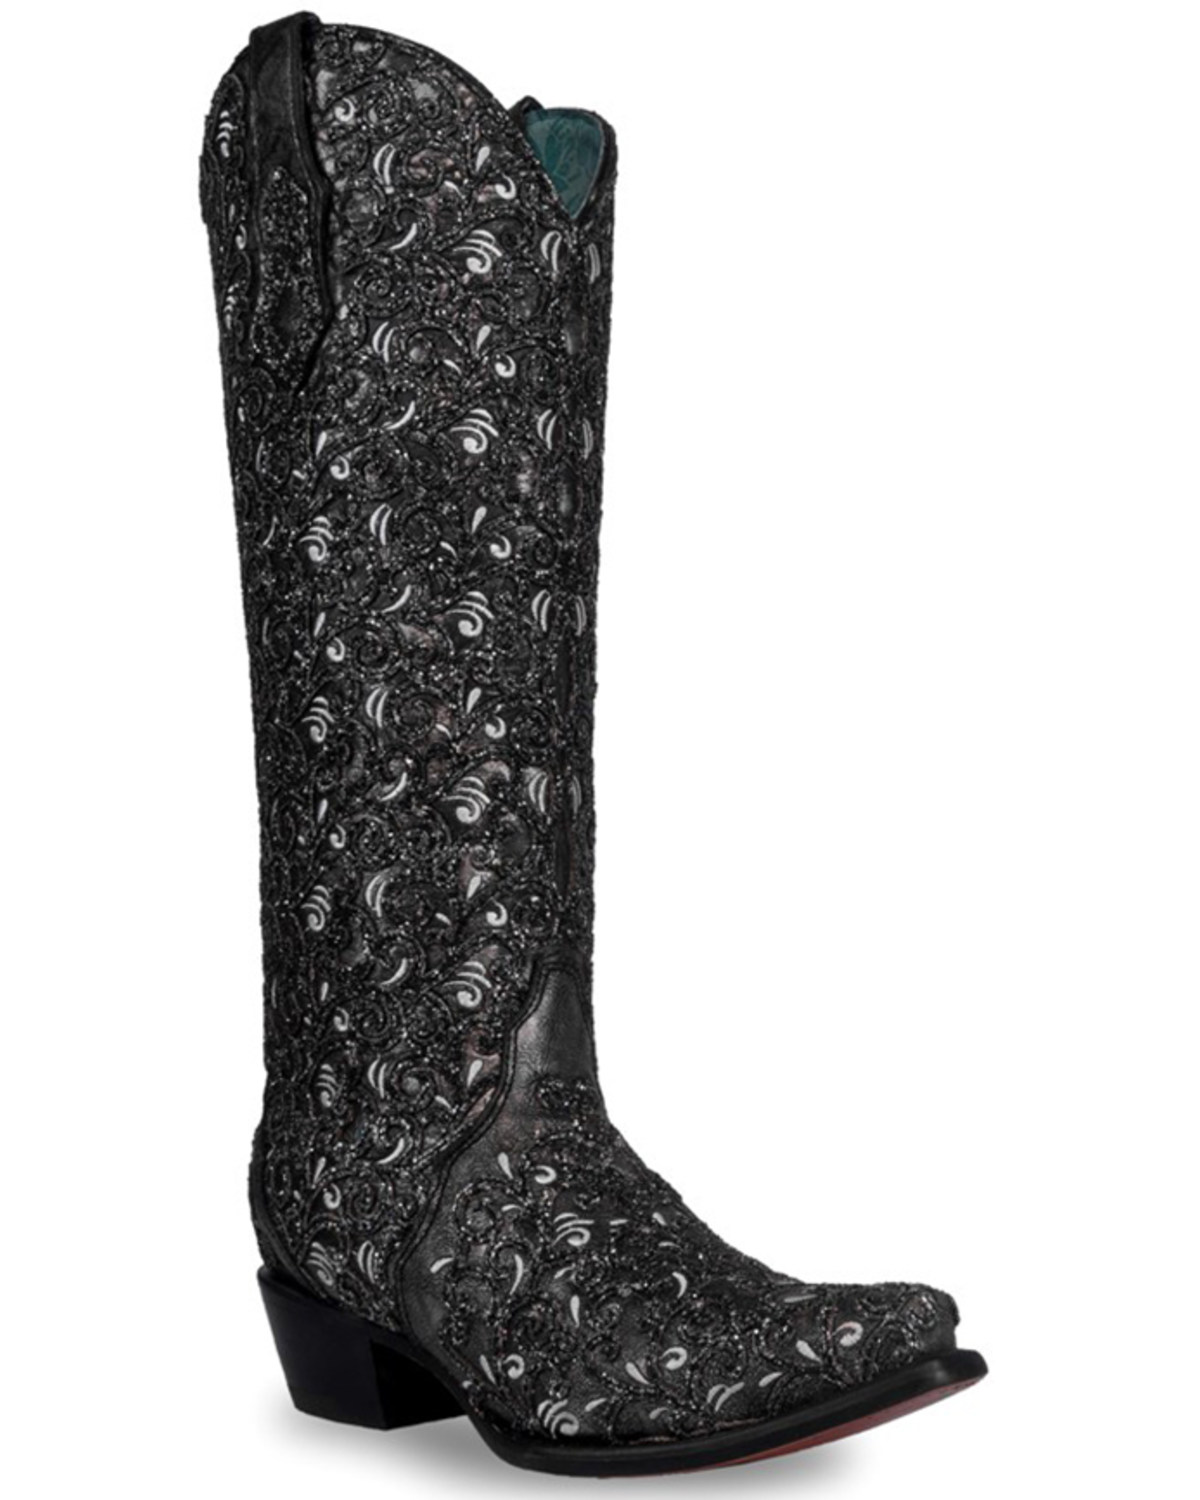 Corral Women's Glitter Tall Western Boots - Snip Toe